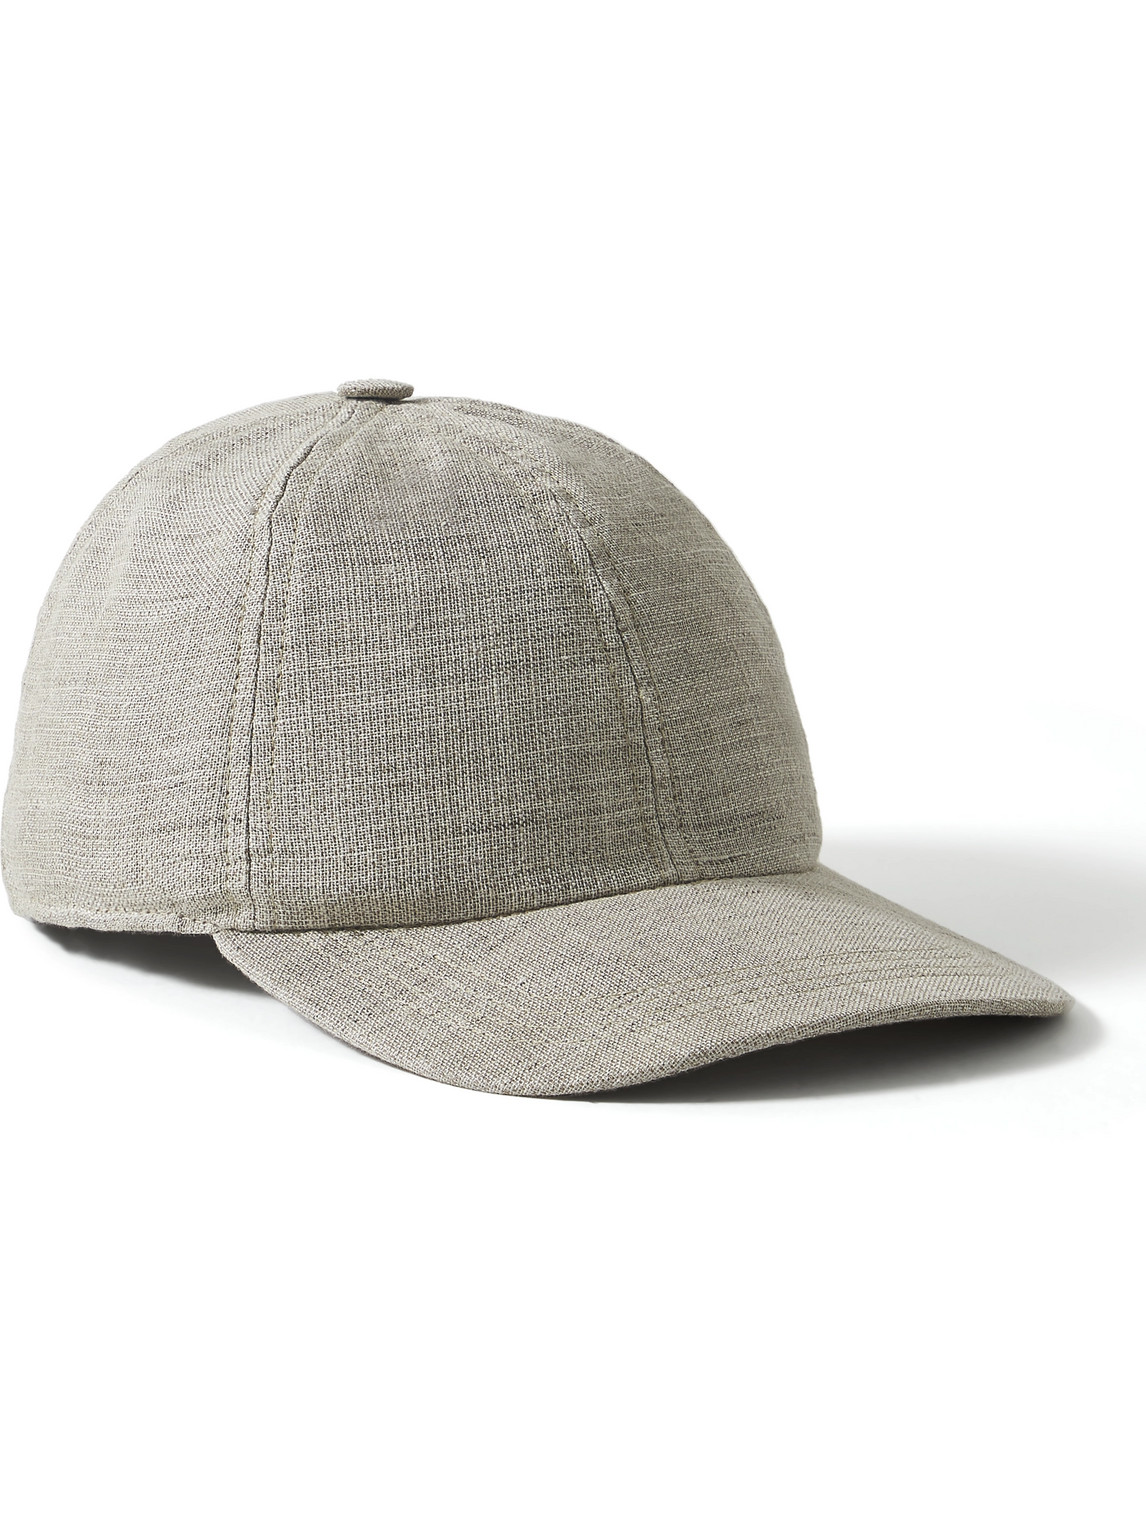 Lock & Co Hatters Rimini Cotton And Linen-blend Baseball Cap In Gray